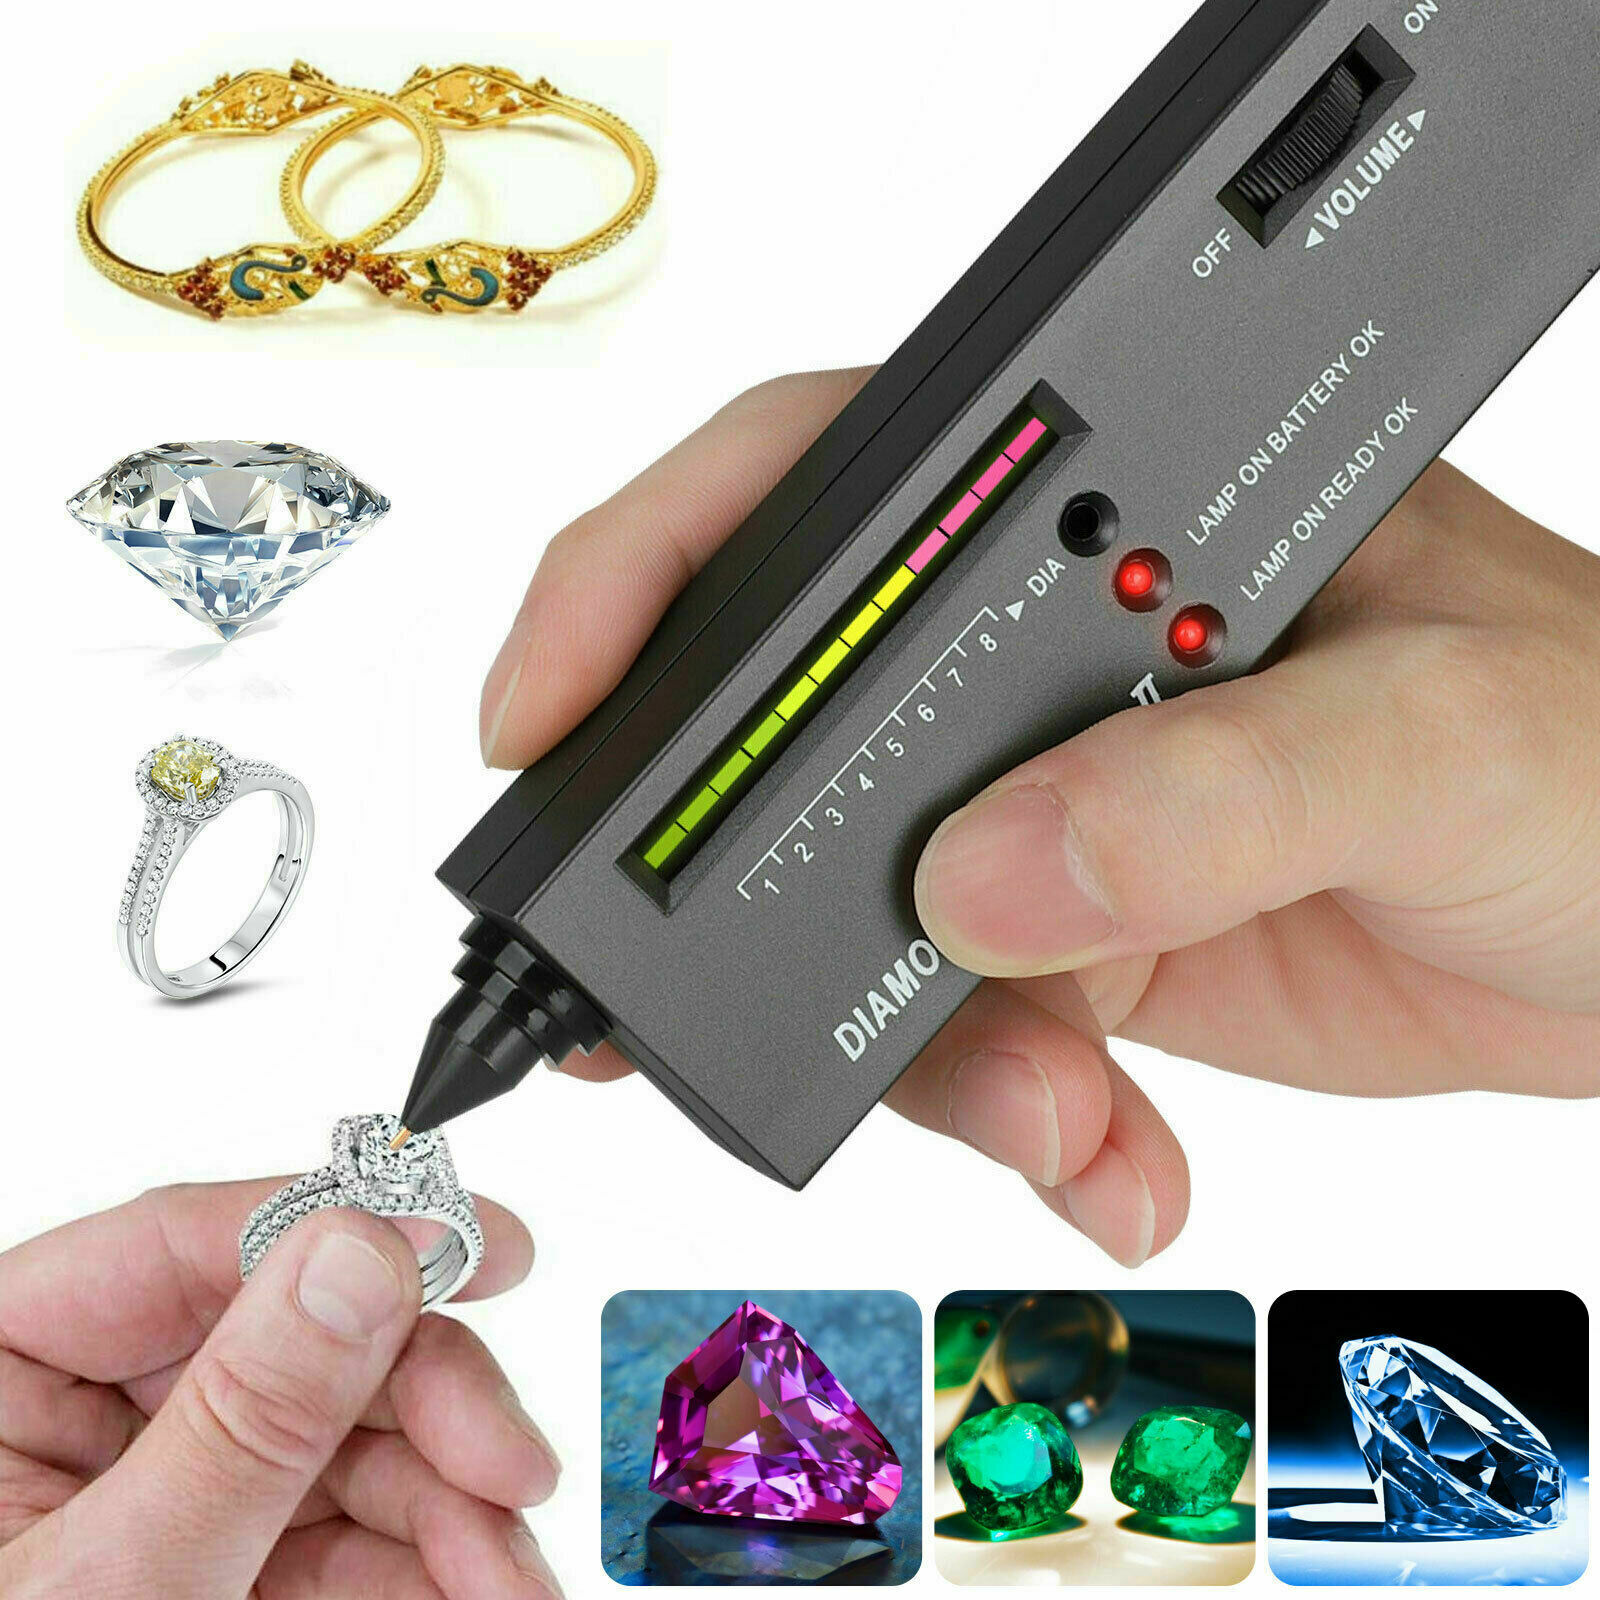 Diamond Tester Pen, High Accuracy Diamond Tester, Professional Jewelery  Selector, Portable LED Audio Jeweler Diamond Gemstone Test Tool for Novice  and